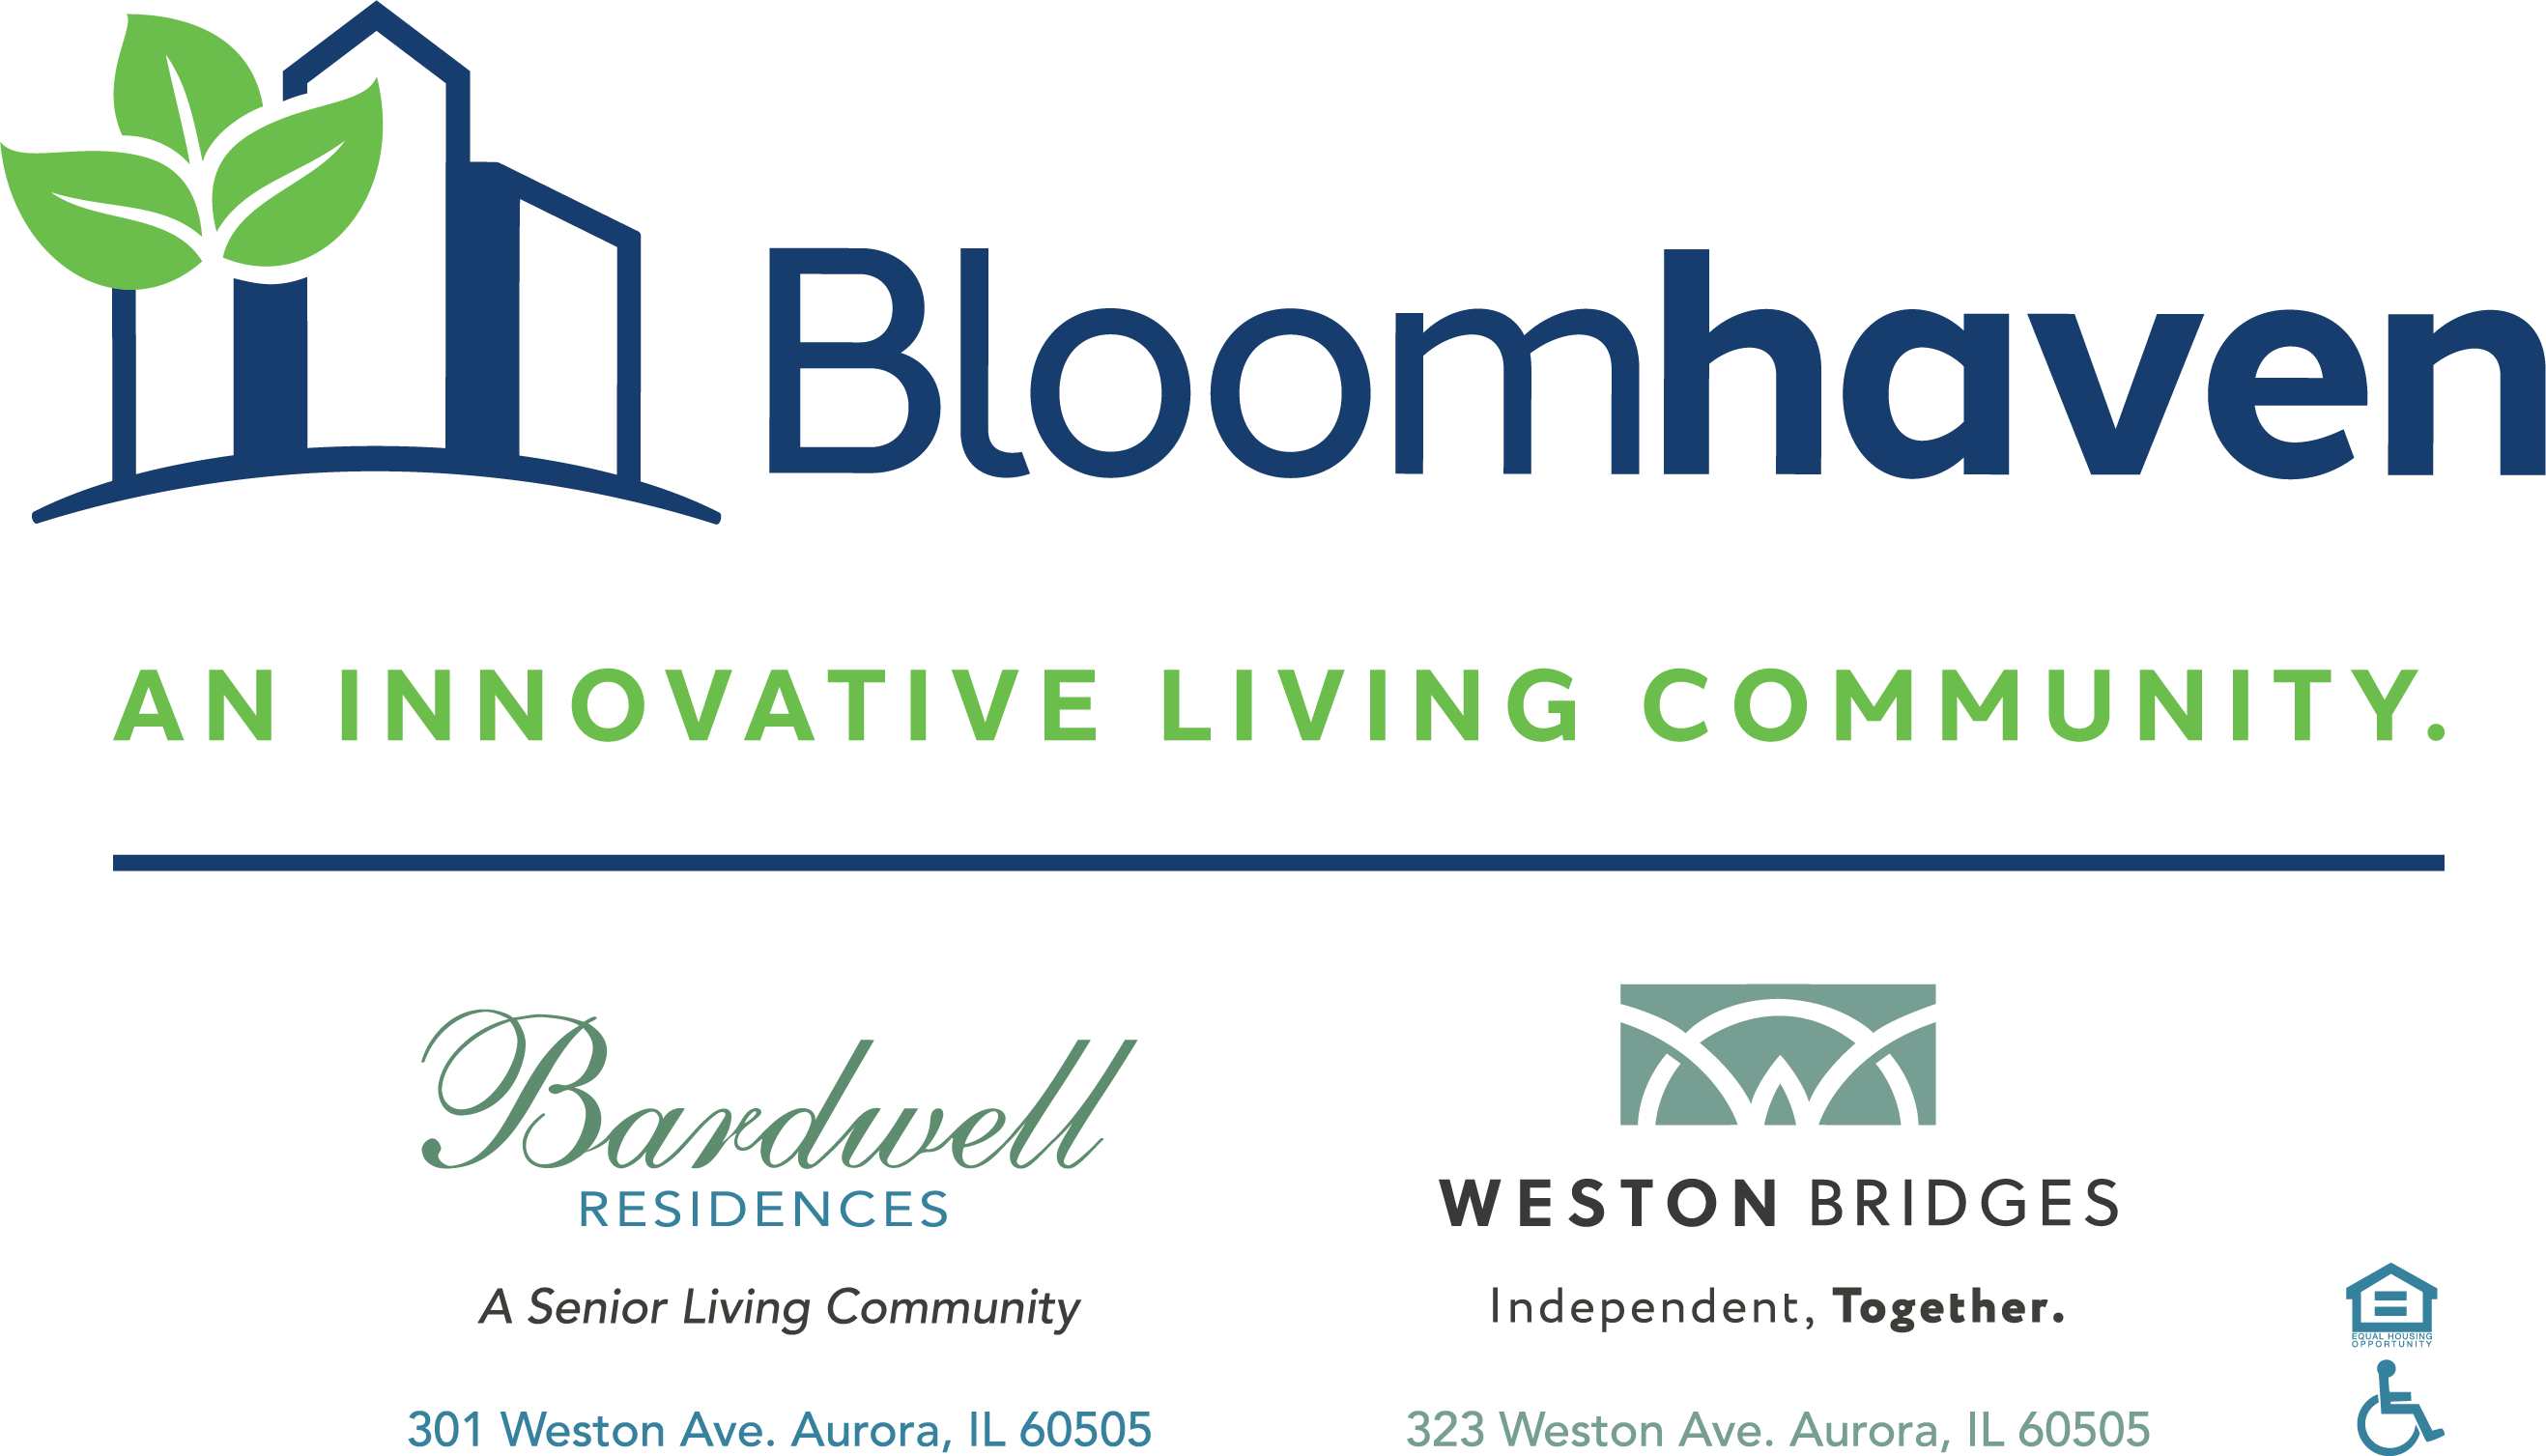 Bloomhaven__Combined_Logo_Address